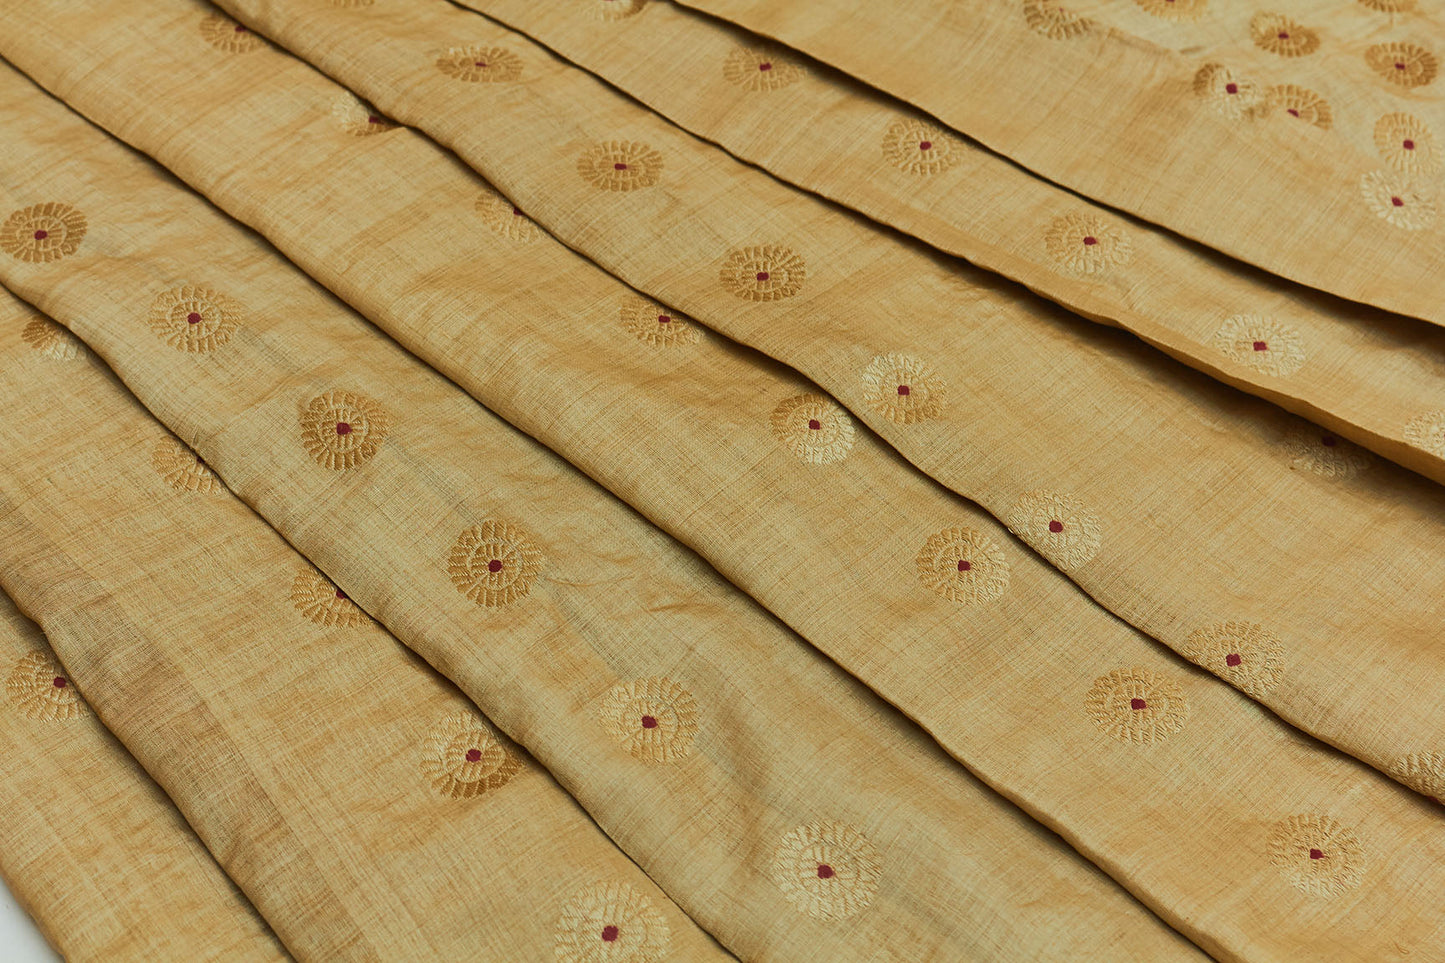 Golden Flower Assam Muga Handloom Silk Sari  (Made to order)